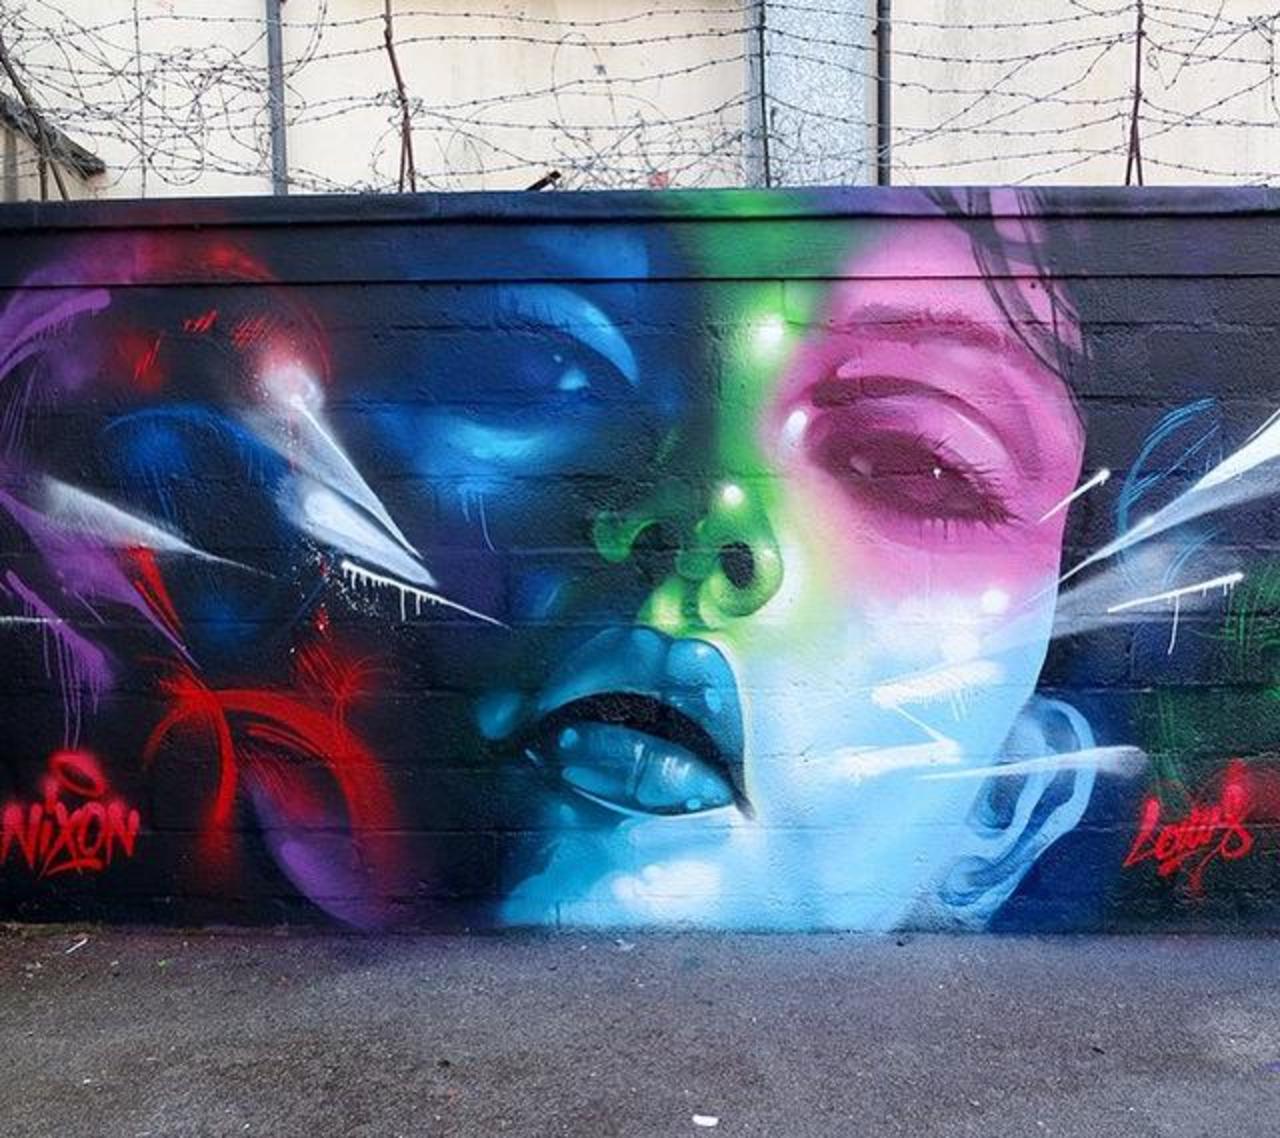 New Street Art by rmerism in Cardiff 

#art #arte #graffiti #streetart http://t.co/Cj0YPaqOND